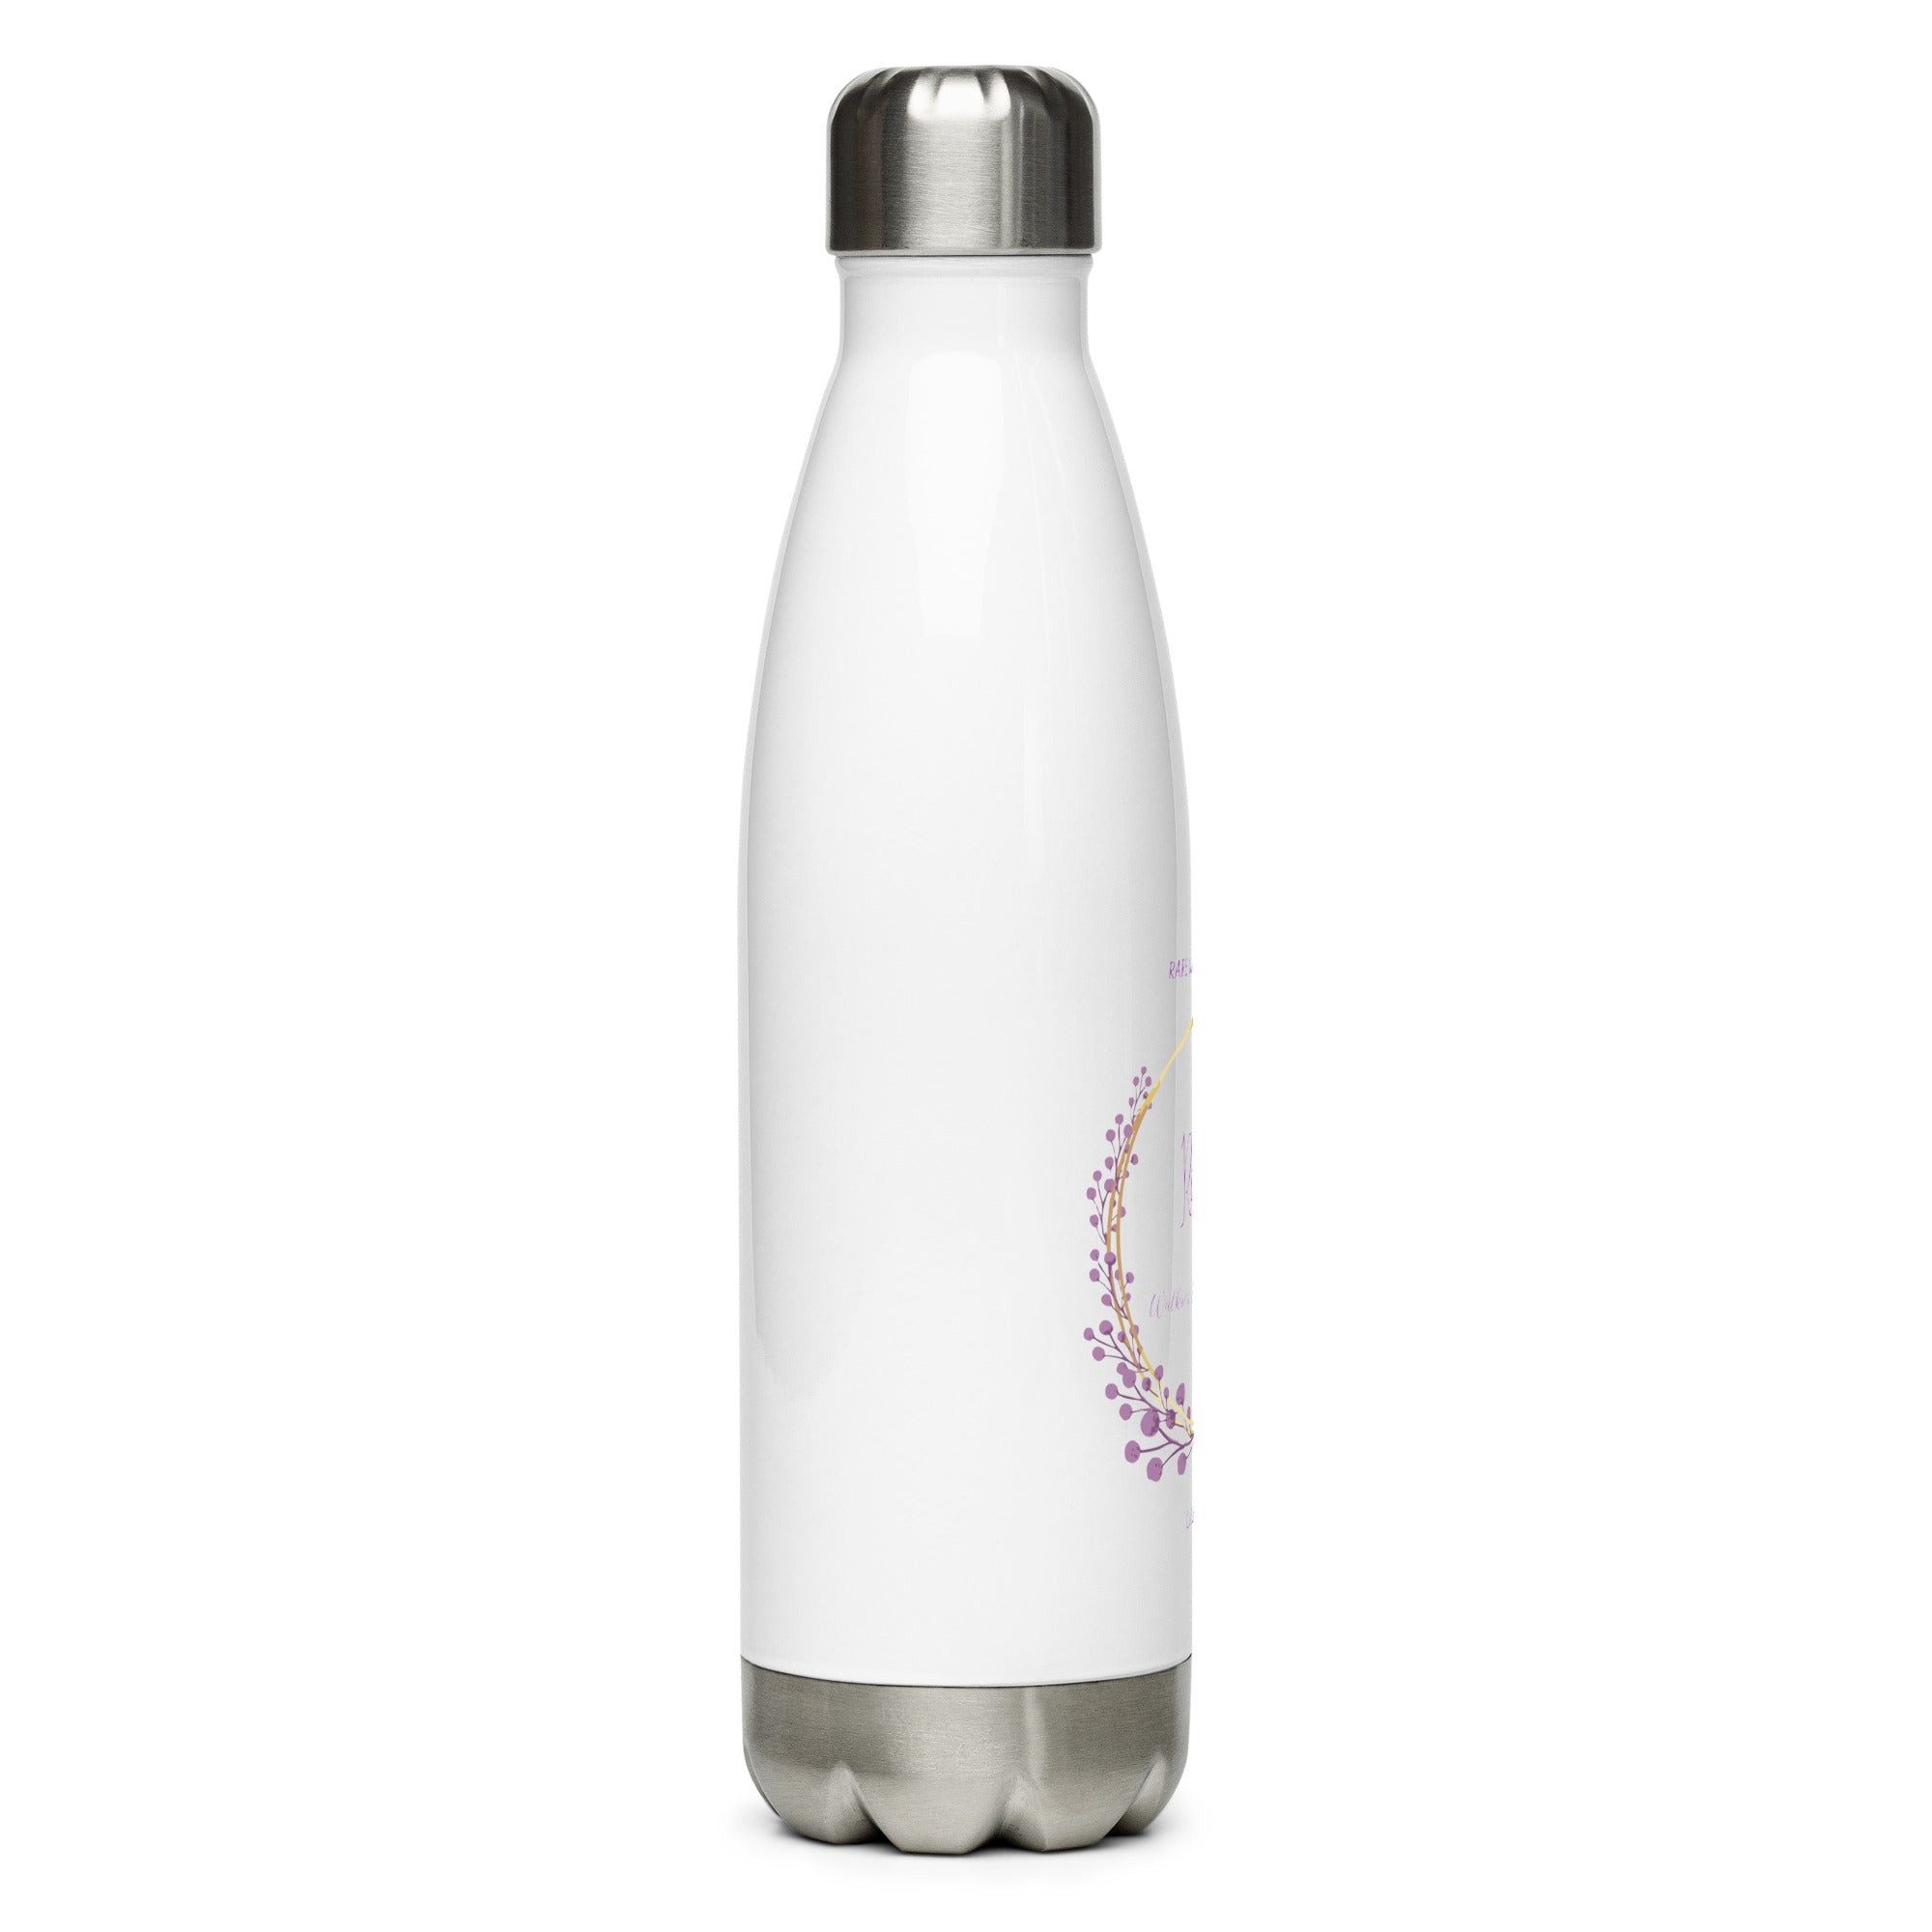 RWM Stainless Steel Water Bottle